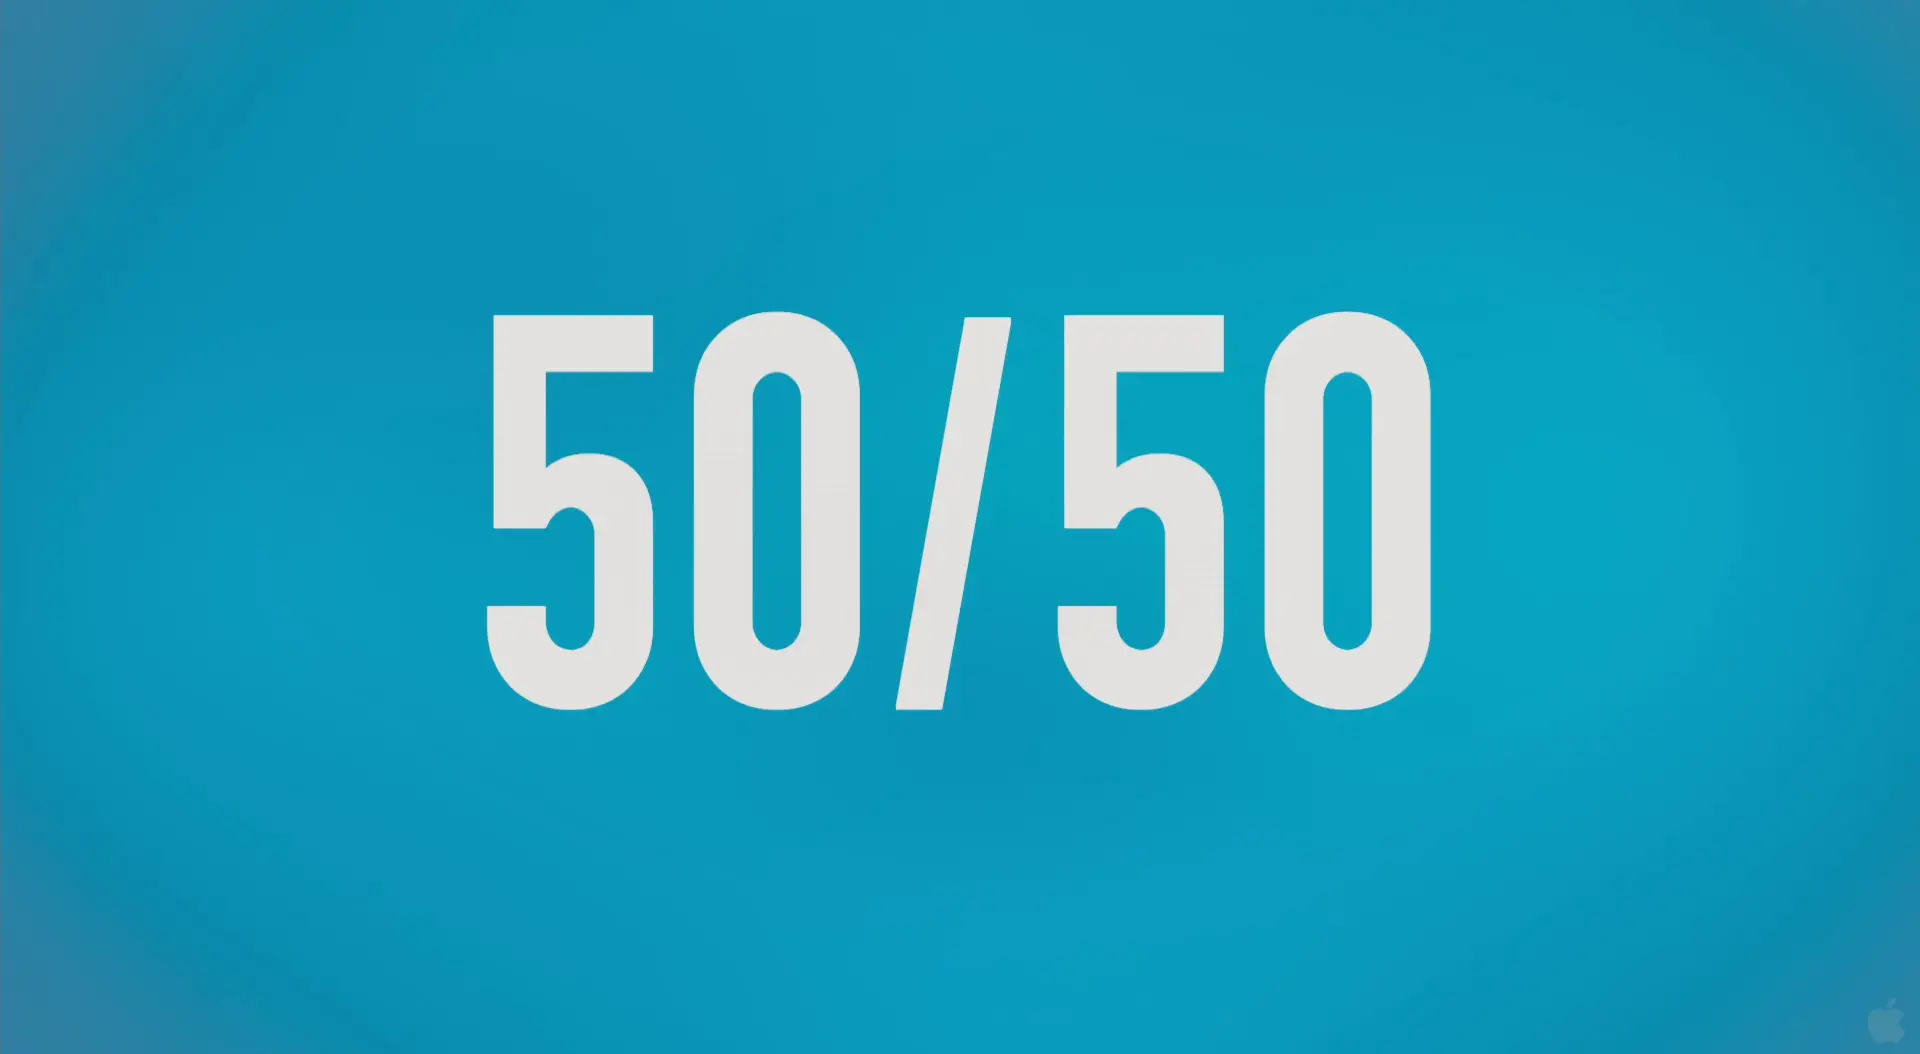 Пятидесятому пятьдесят. 50 На 50. 50 Картинка. Изображение 50 на 50. Логотип 50 на 50.